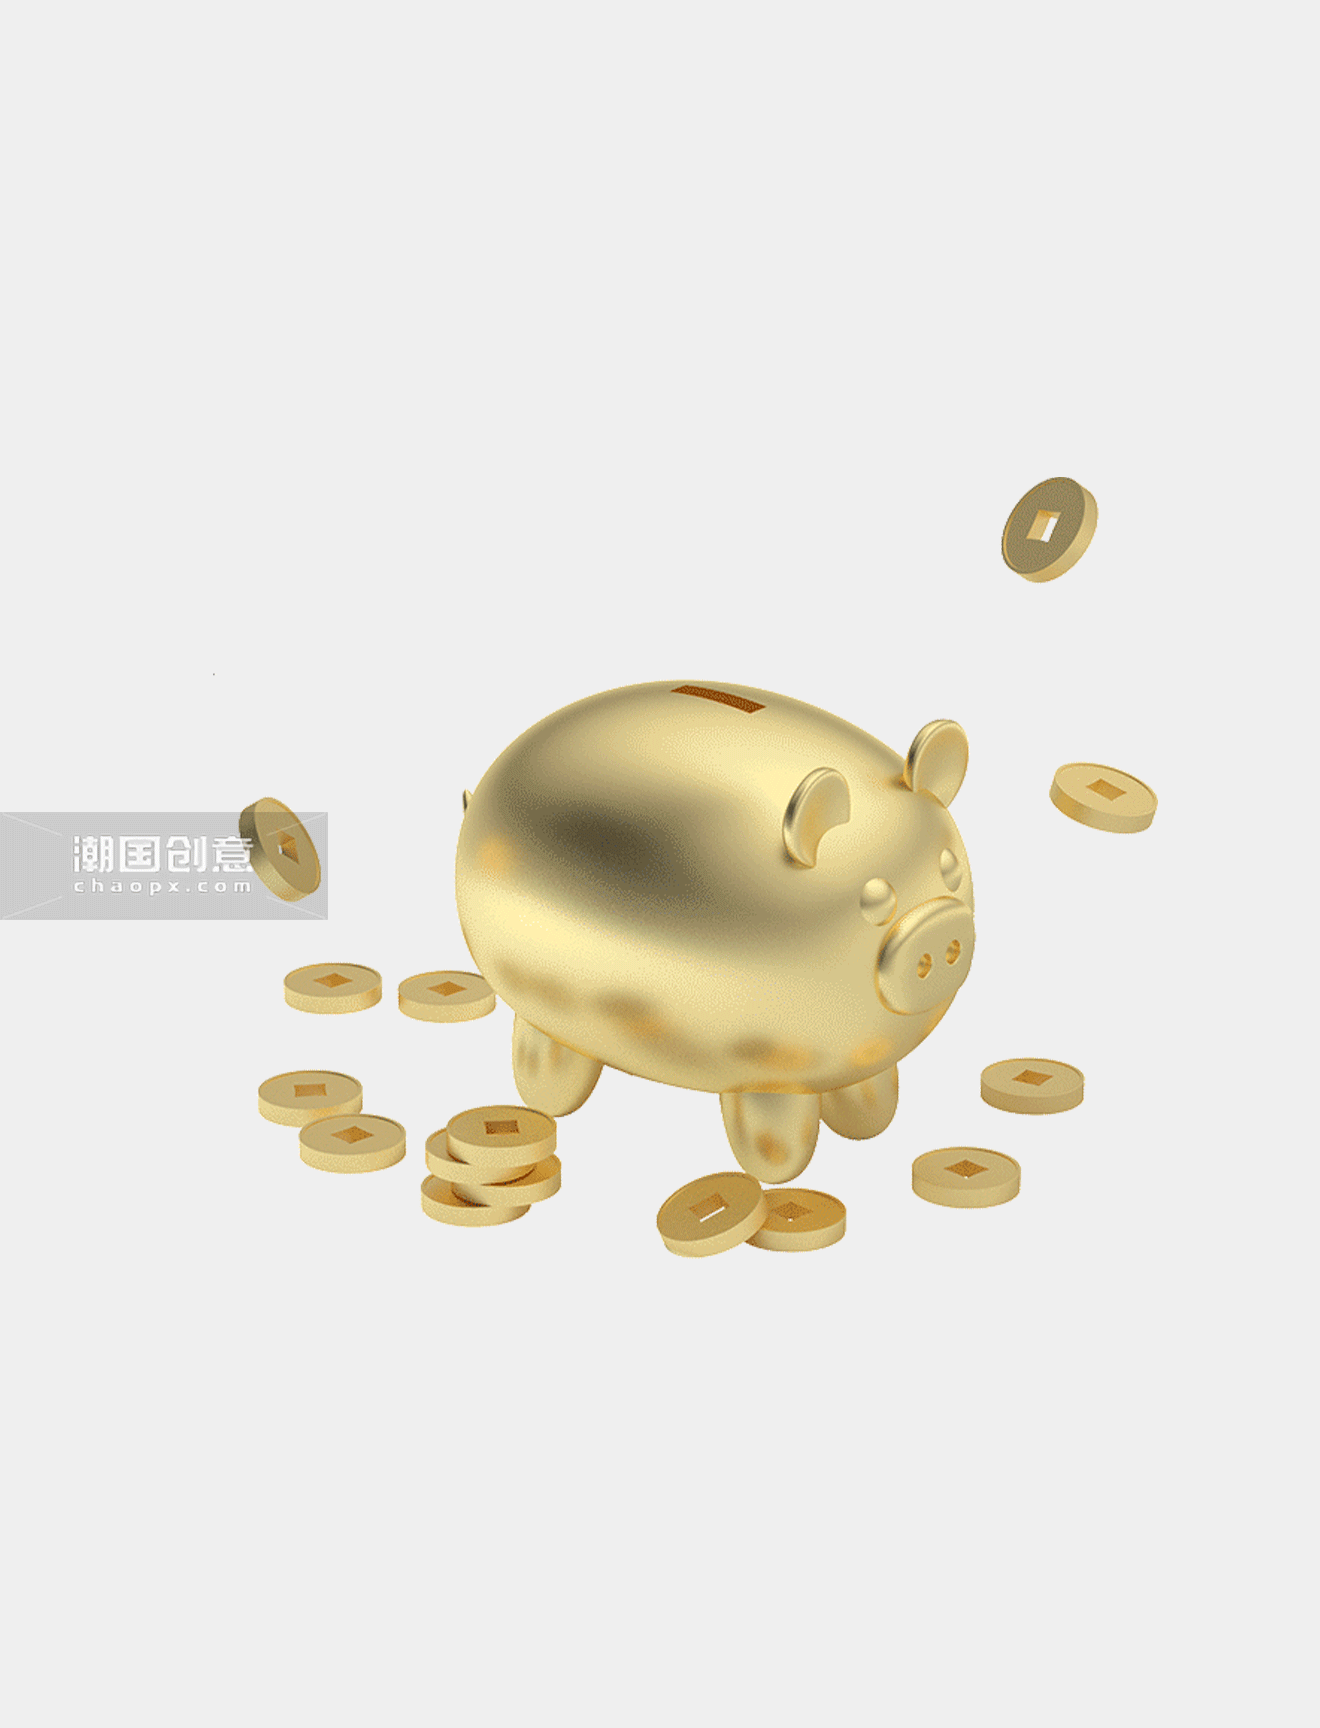 c4d金融理财储蓄黄金金币小猪储钱罐 3D立体动图gif